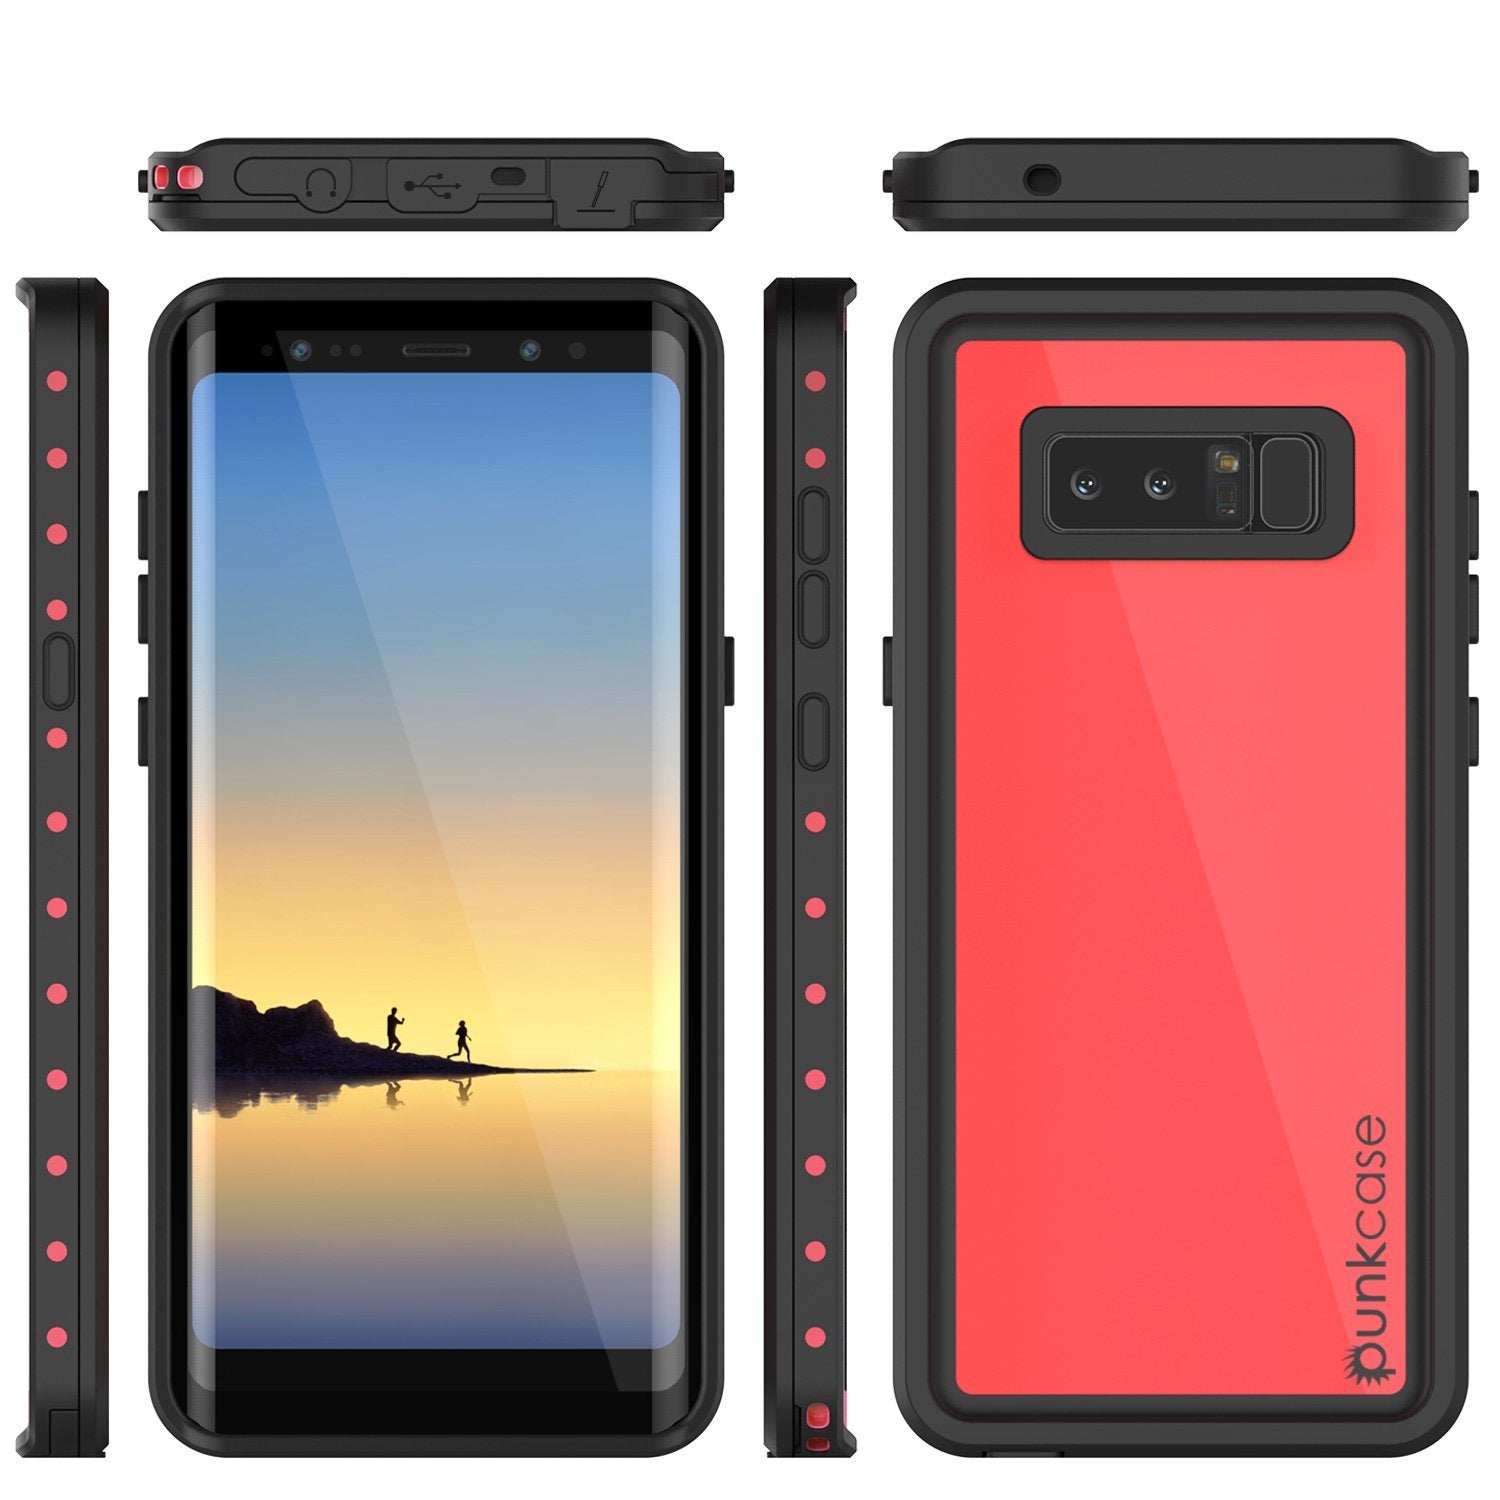 Galaxy Note 8 Waterproof Case PunkCase StudStar Pink Thin 6.6ft Underwater IP68 Shock/Snow Proof - PunkCase NZ